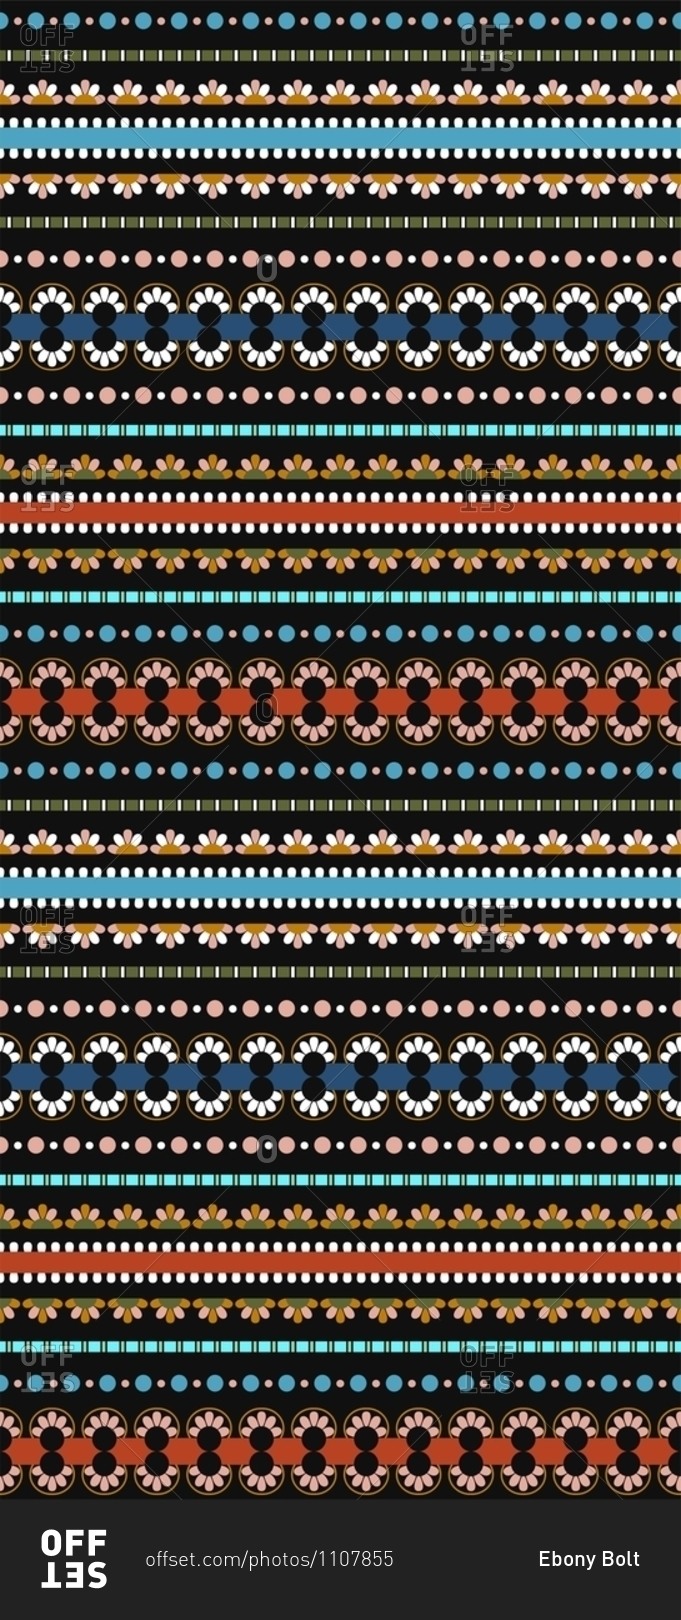 Multi colored horizontal stripe pattern stock photo -
OFFSET